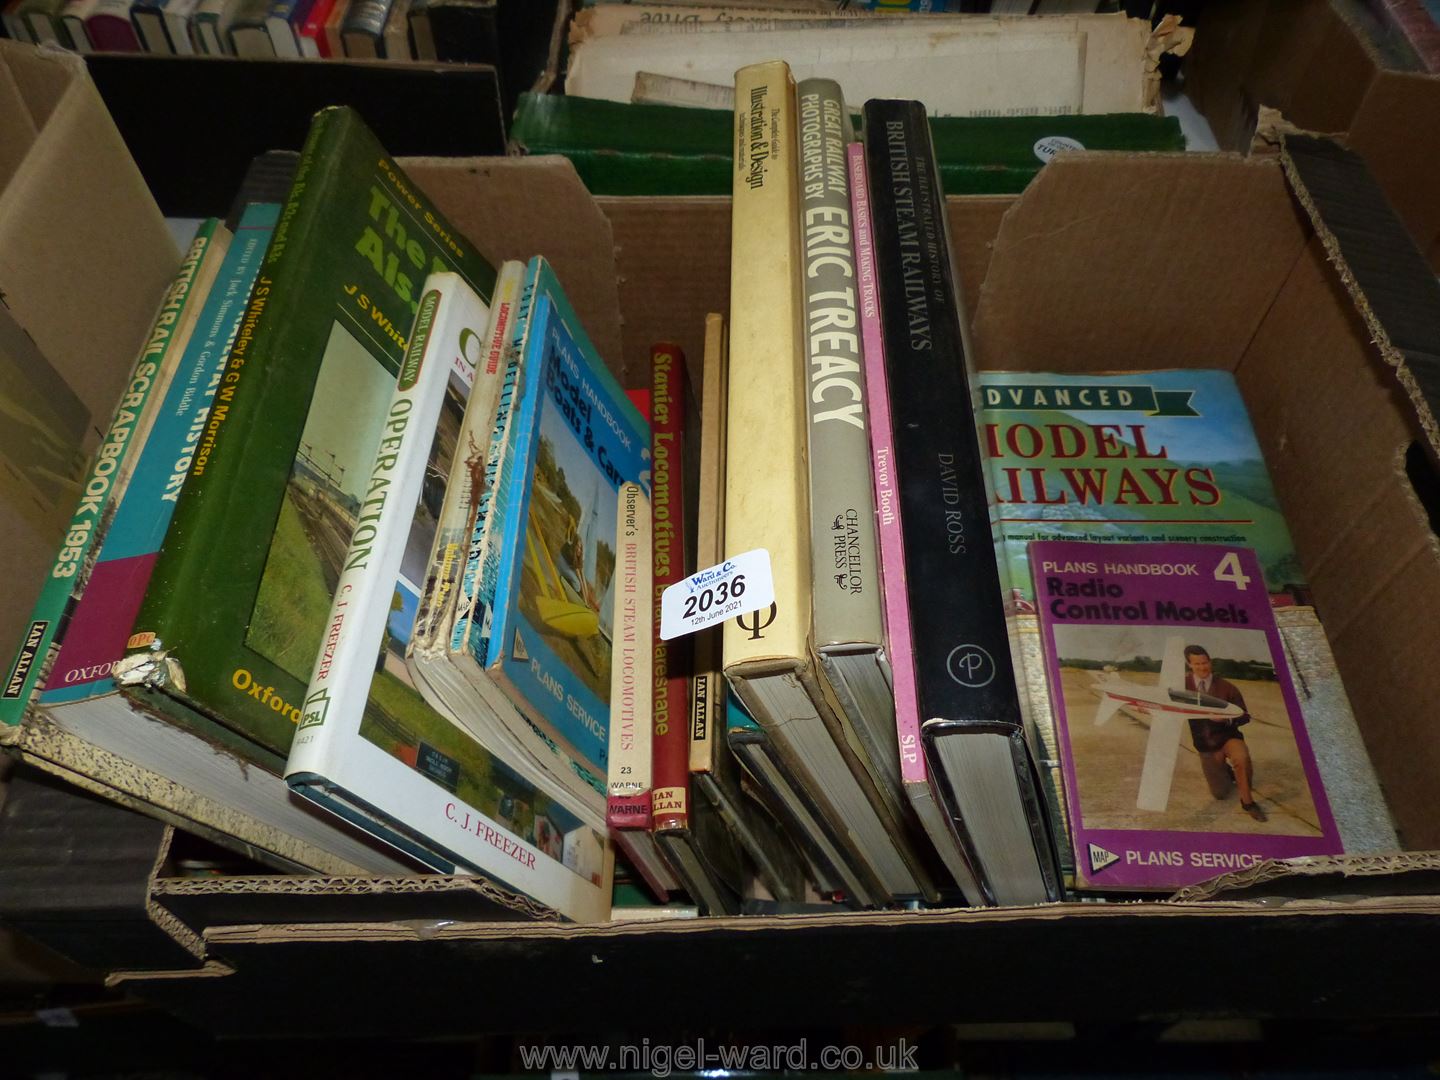 A box of books including British Railway history, Stanier locomotives, model boats, etc.